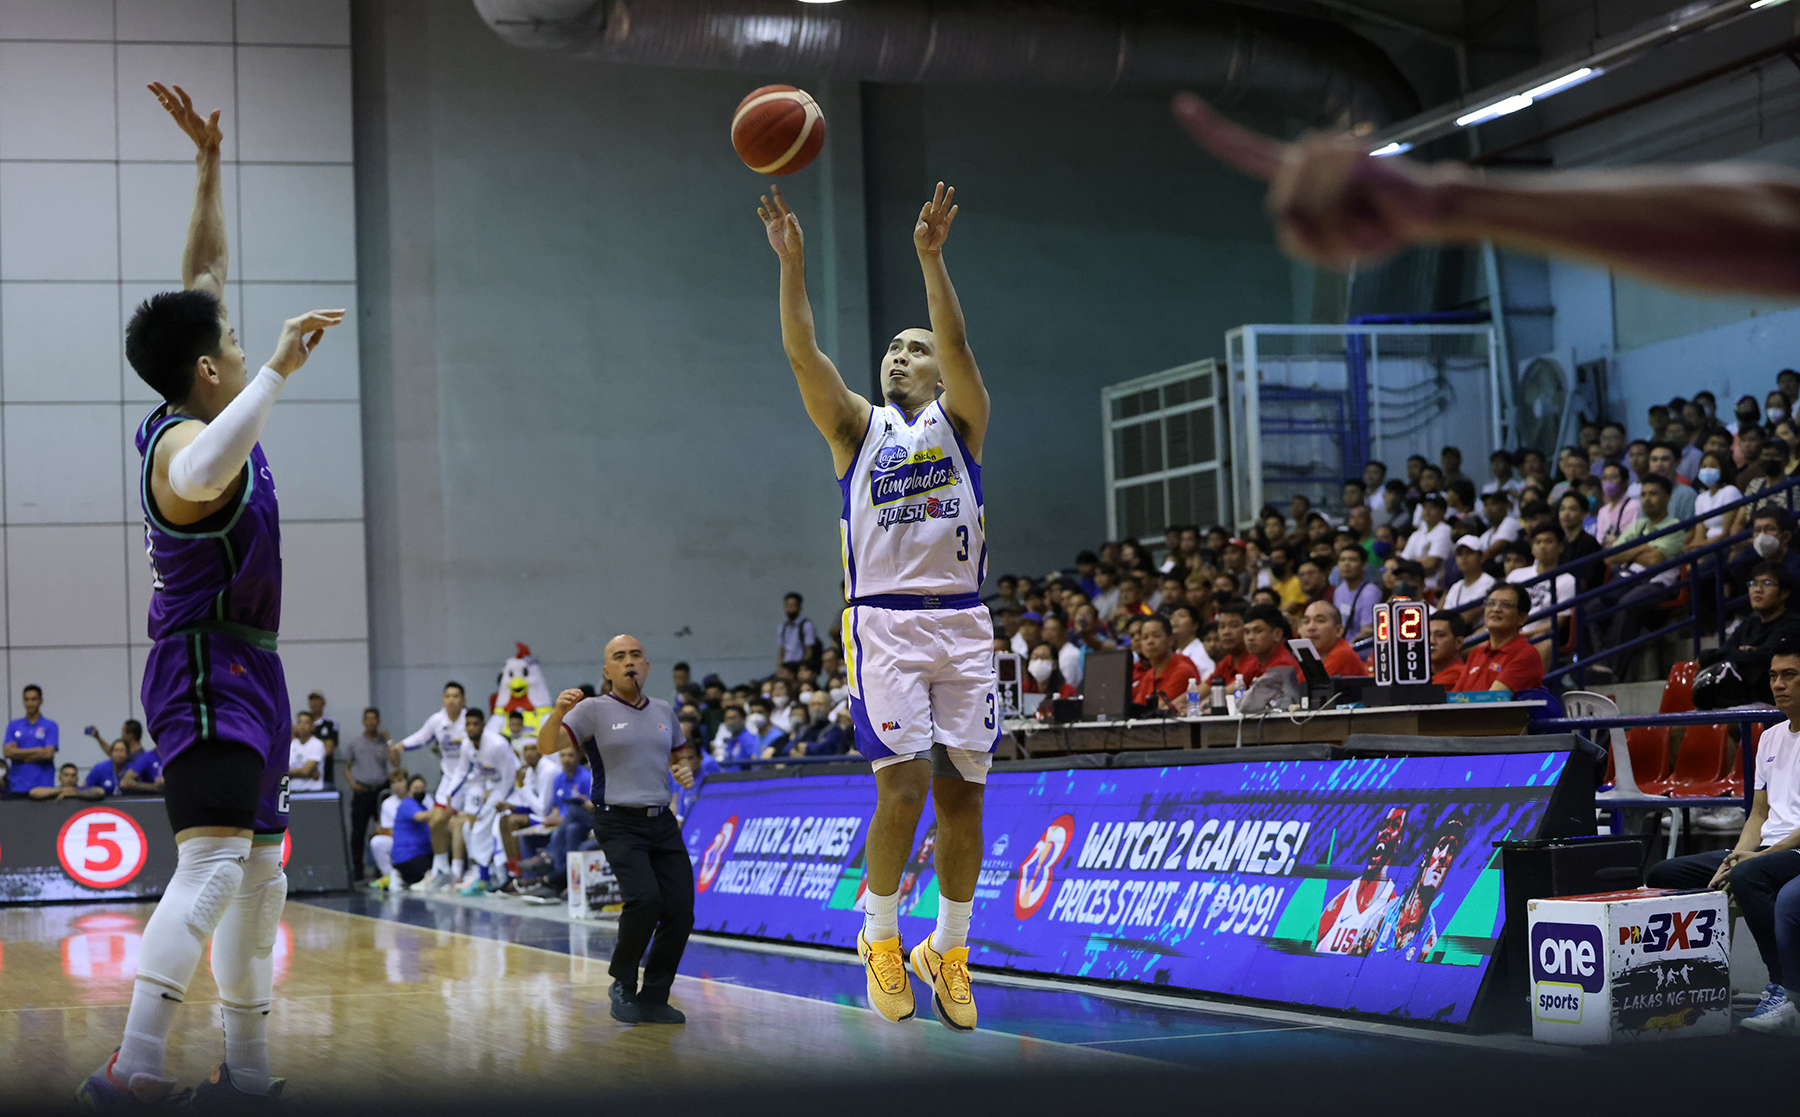 Paul Lee PBA Magnolia Hot Shots Basketball Jersey Gilas Pilipinas